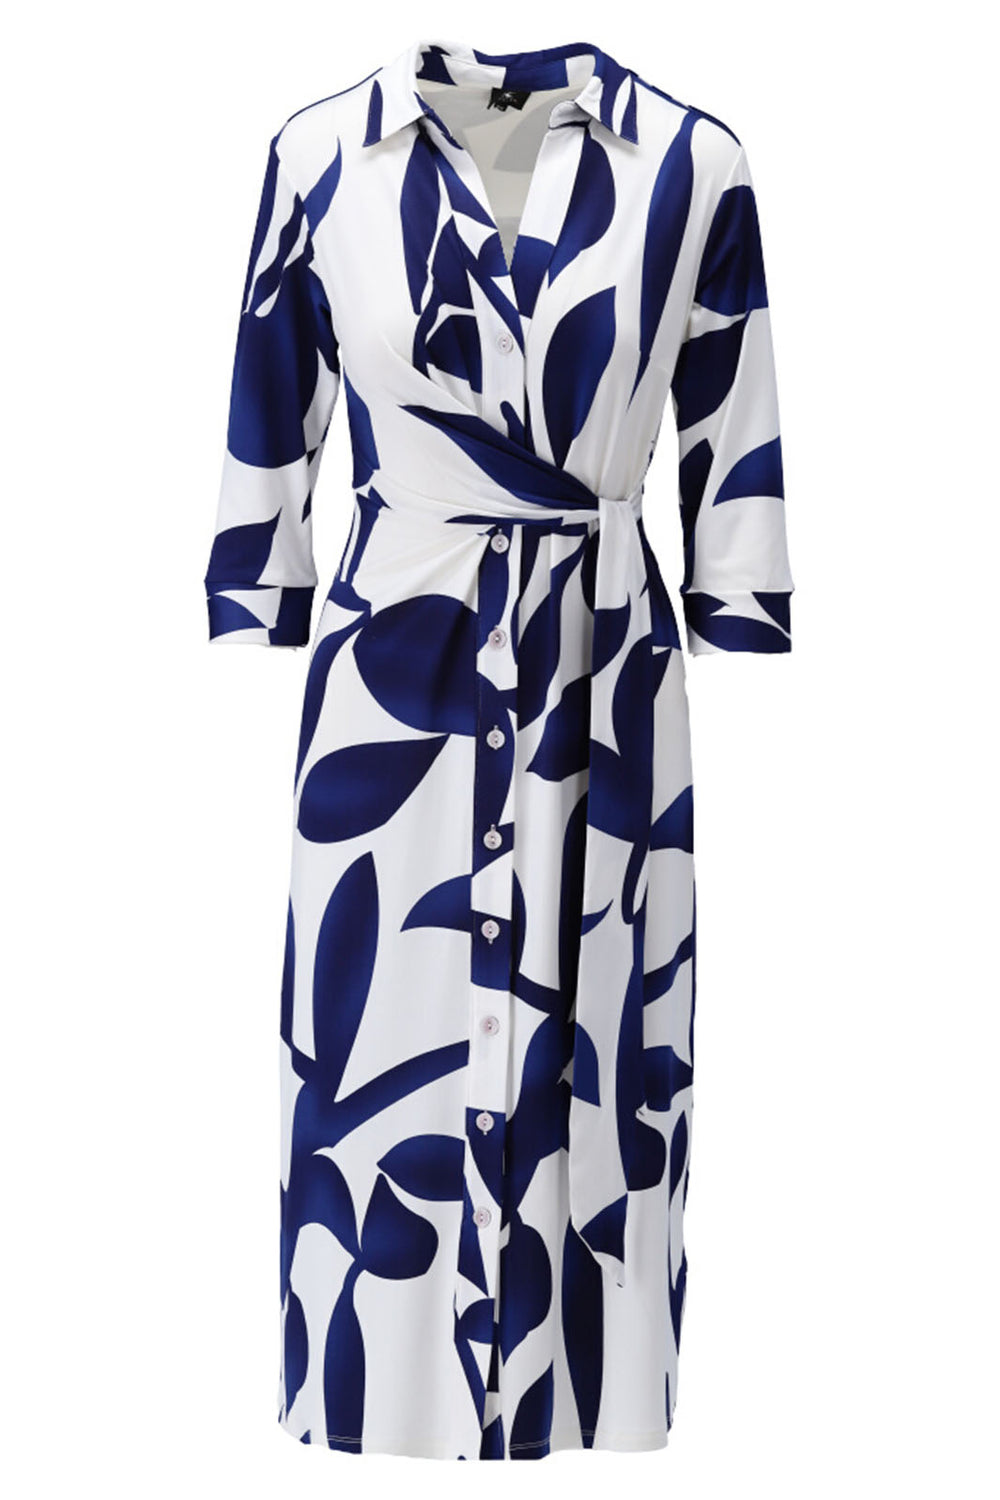 K Design Y326 P747 Blue Geometric Print Midi Shirt Dress - Experience Boutique